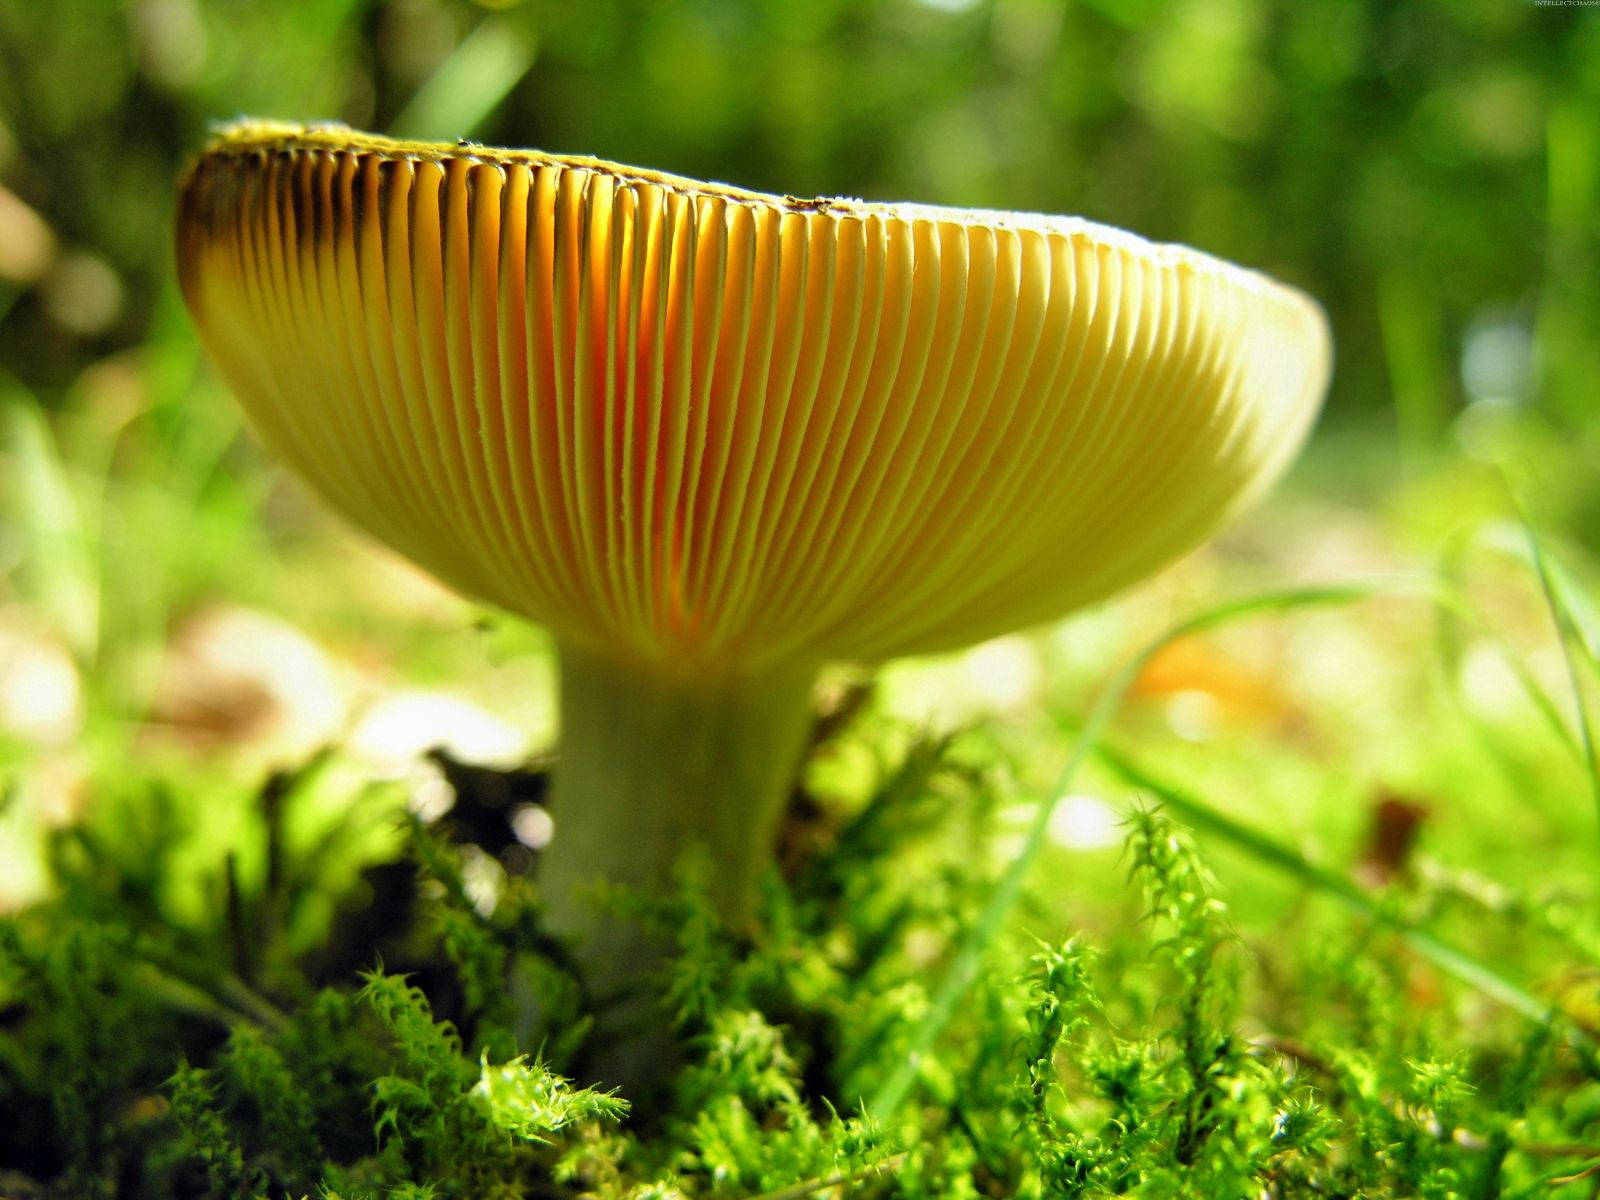 A Wild Yellow Mushroom